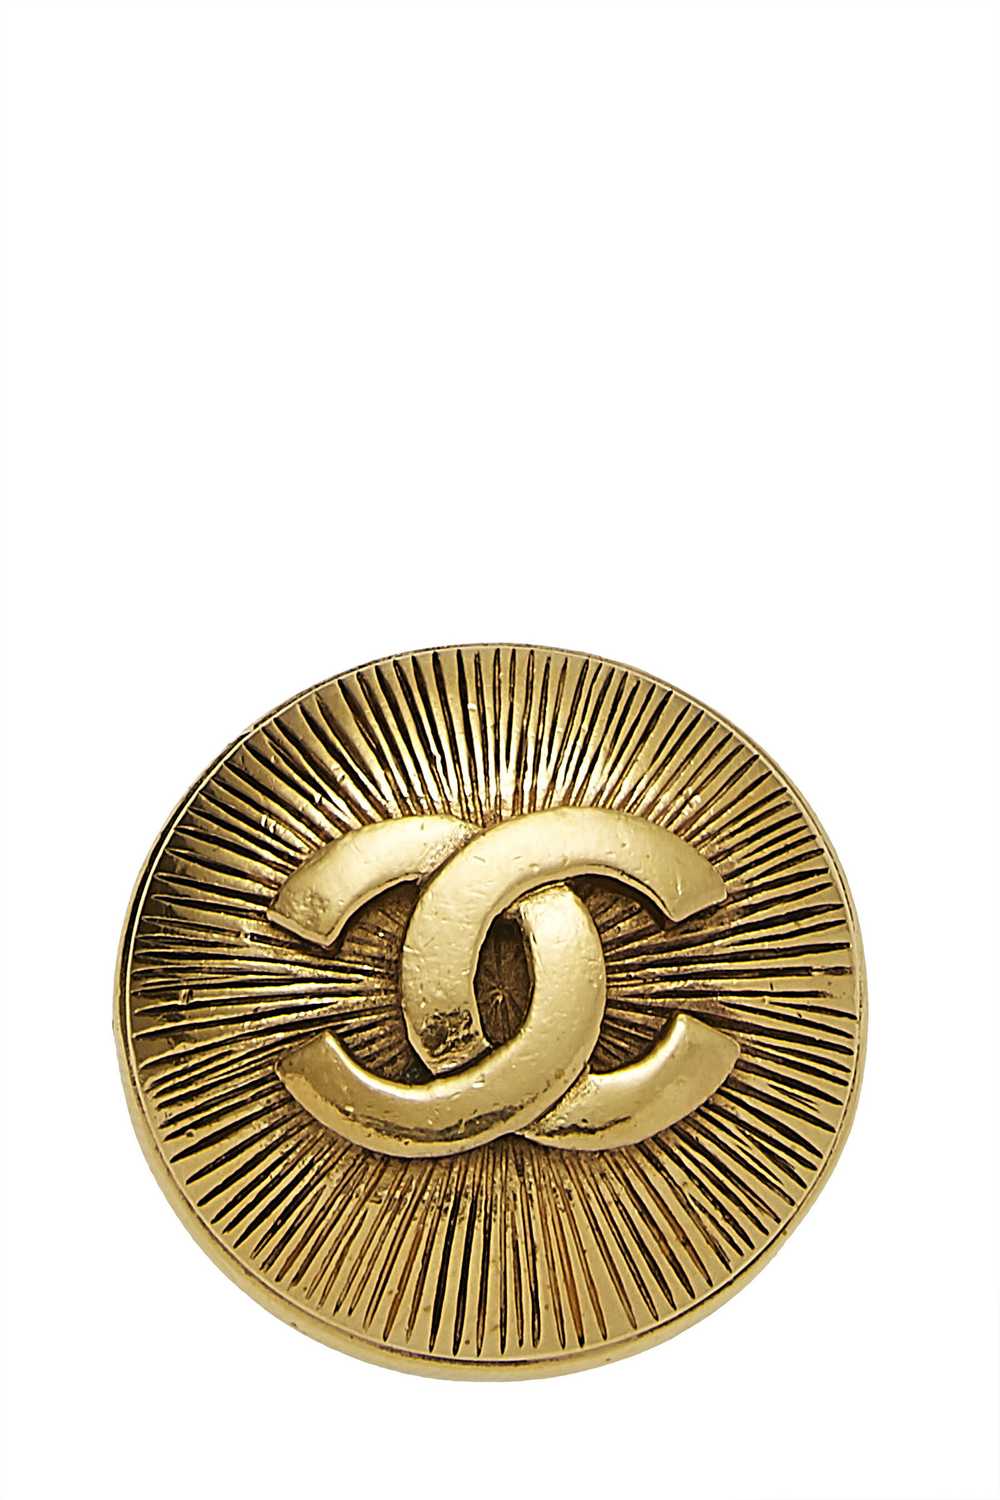 Gold 'CC' Sunburst Pin - image 1